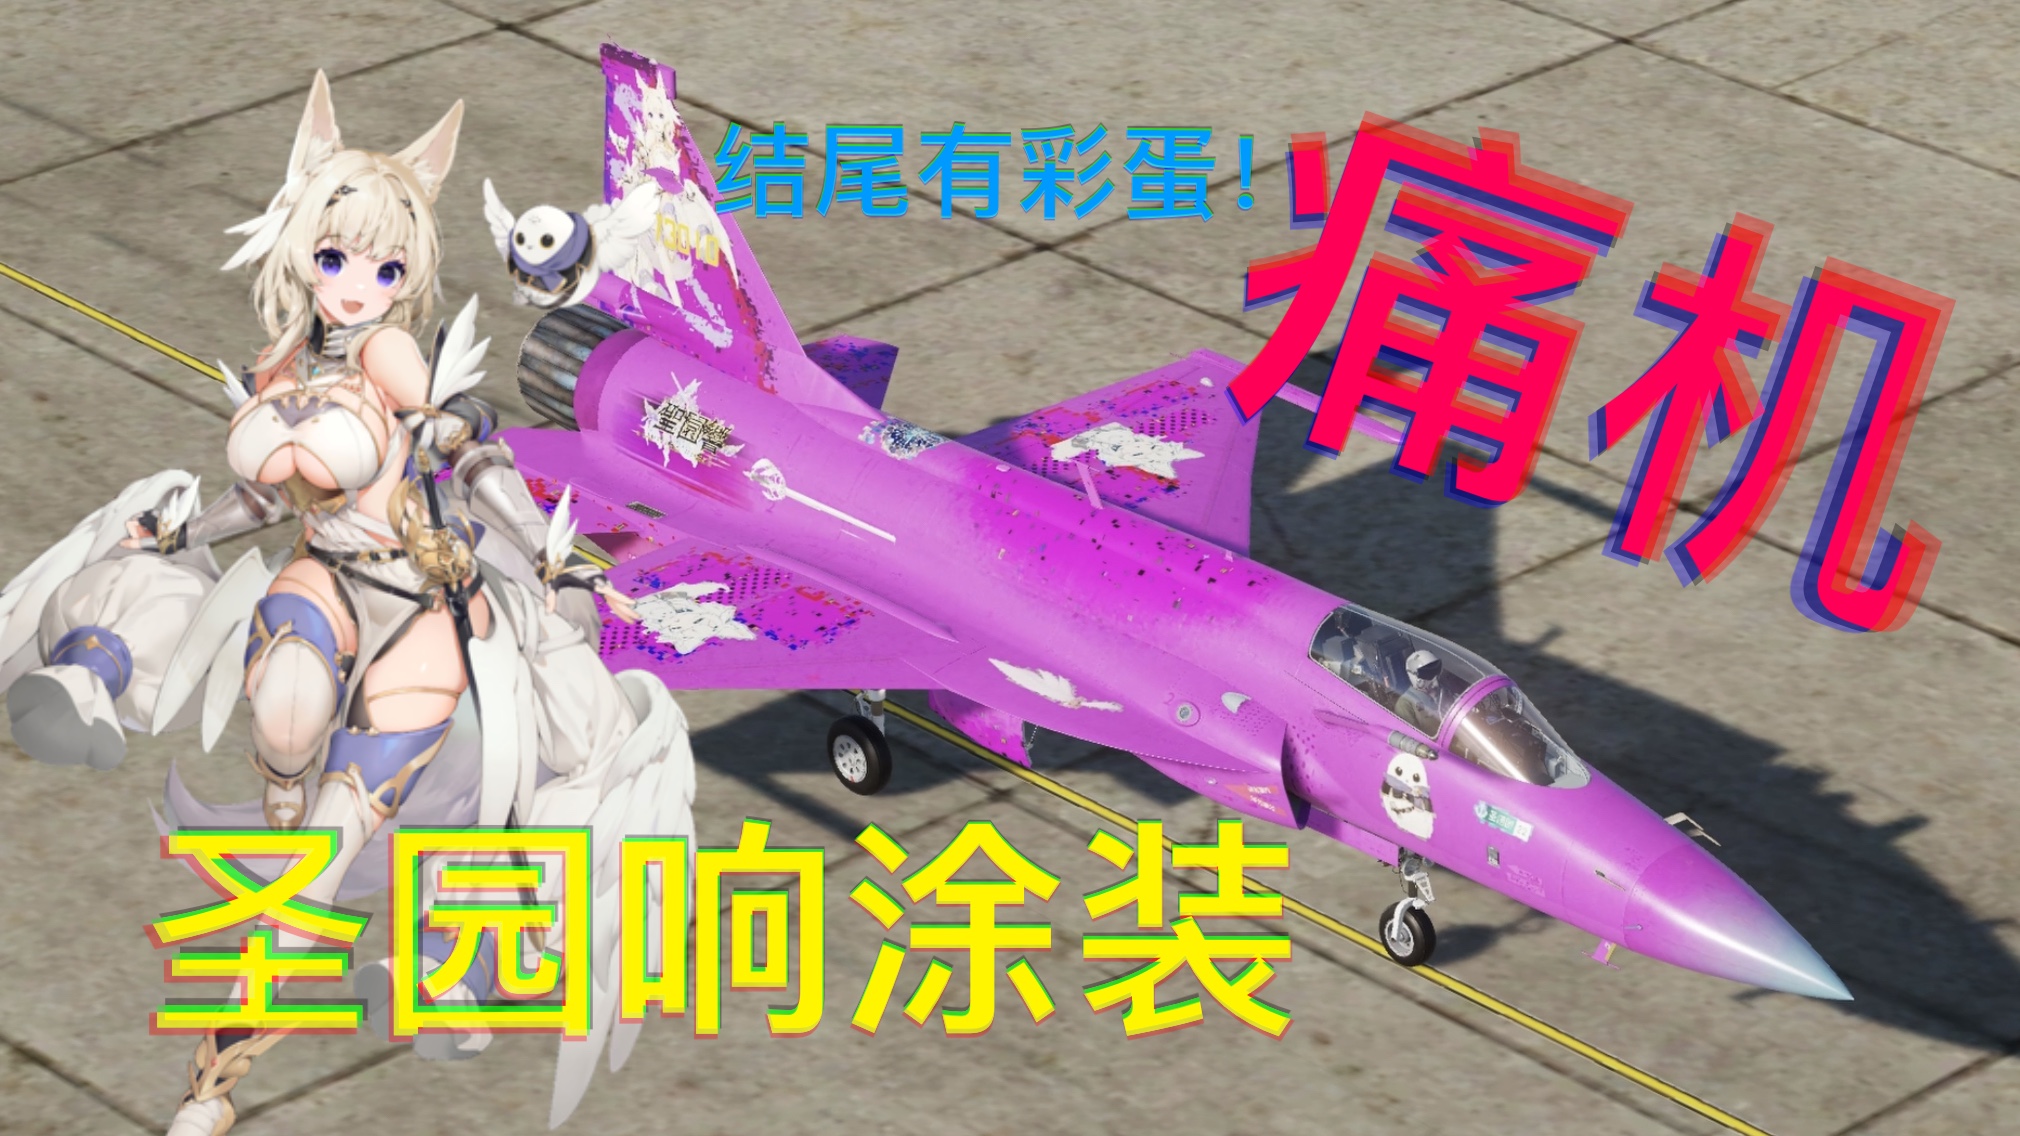 Hibiki livery for JF-17